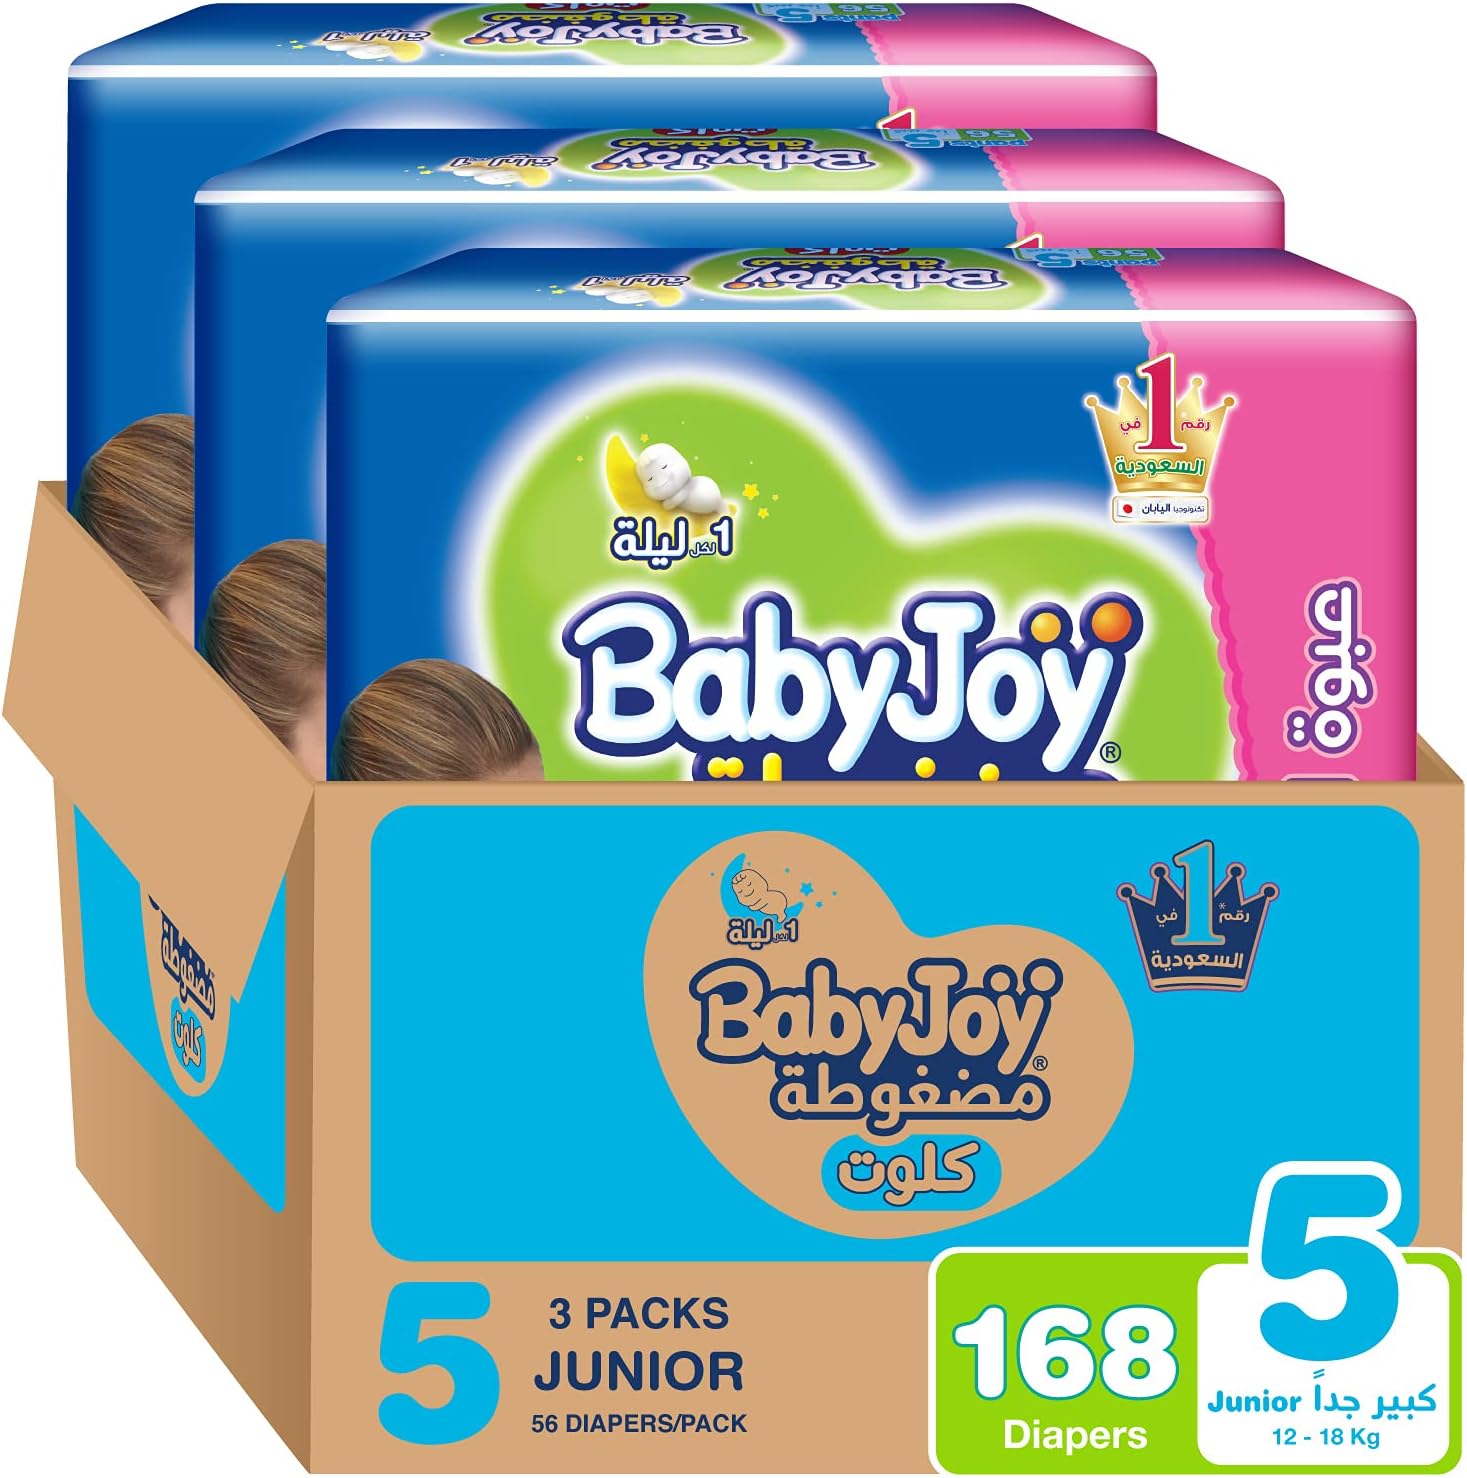 Babyjoy Culotte, Size 6, Junior XXL, 16+ Kg, Giant Box, 150 Diaper Pants